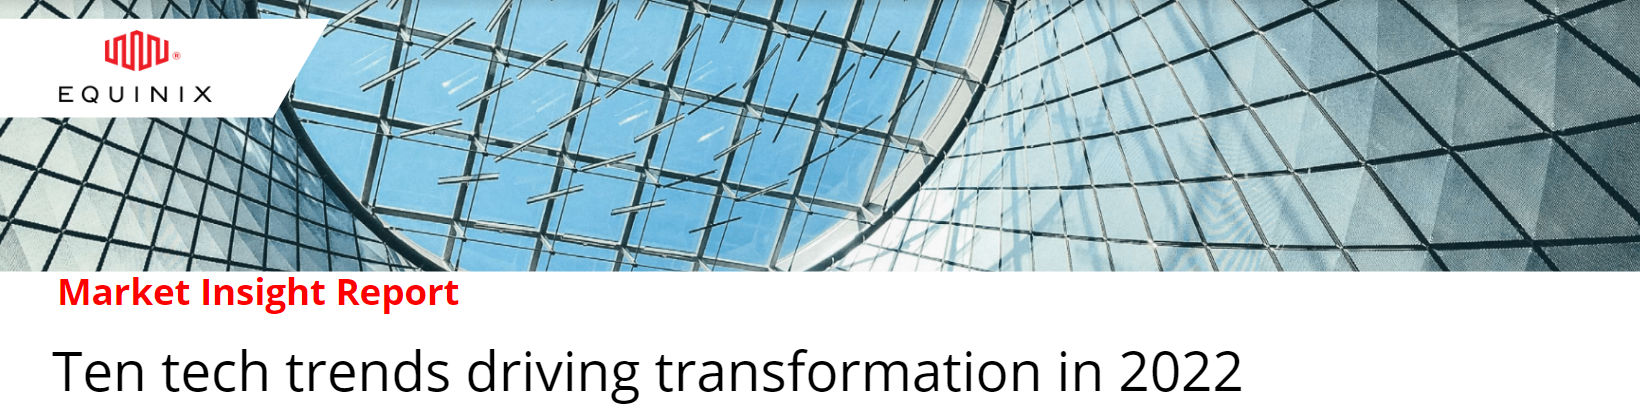 Equinix - Ten tech trends driving transformation in 2022